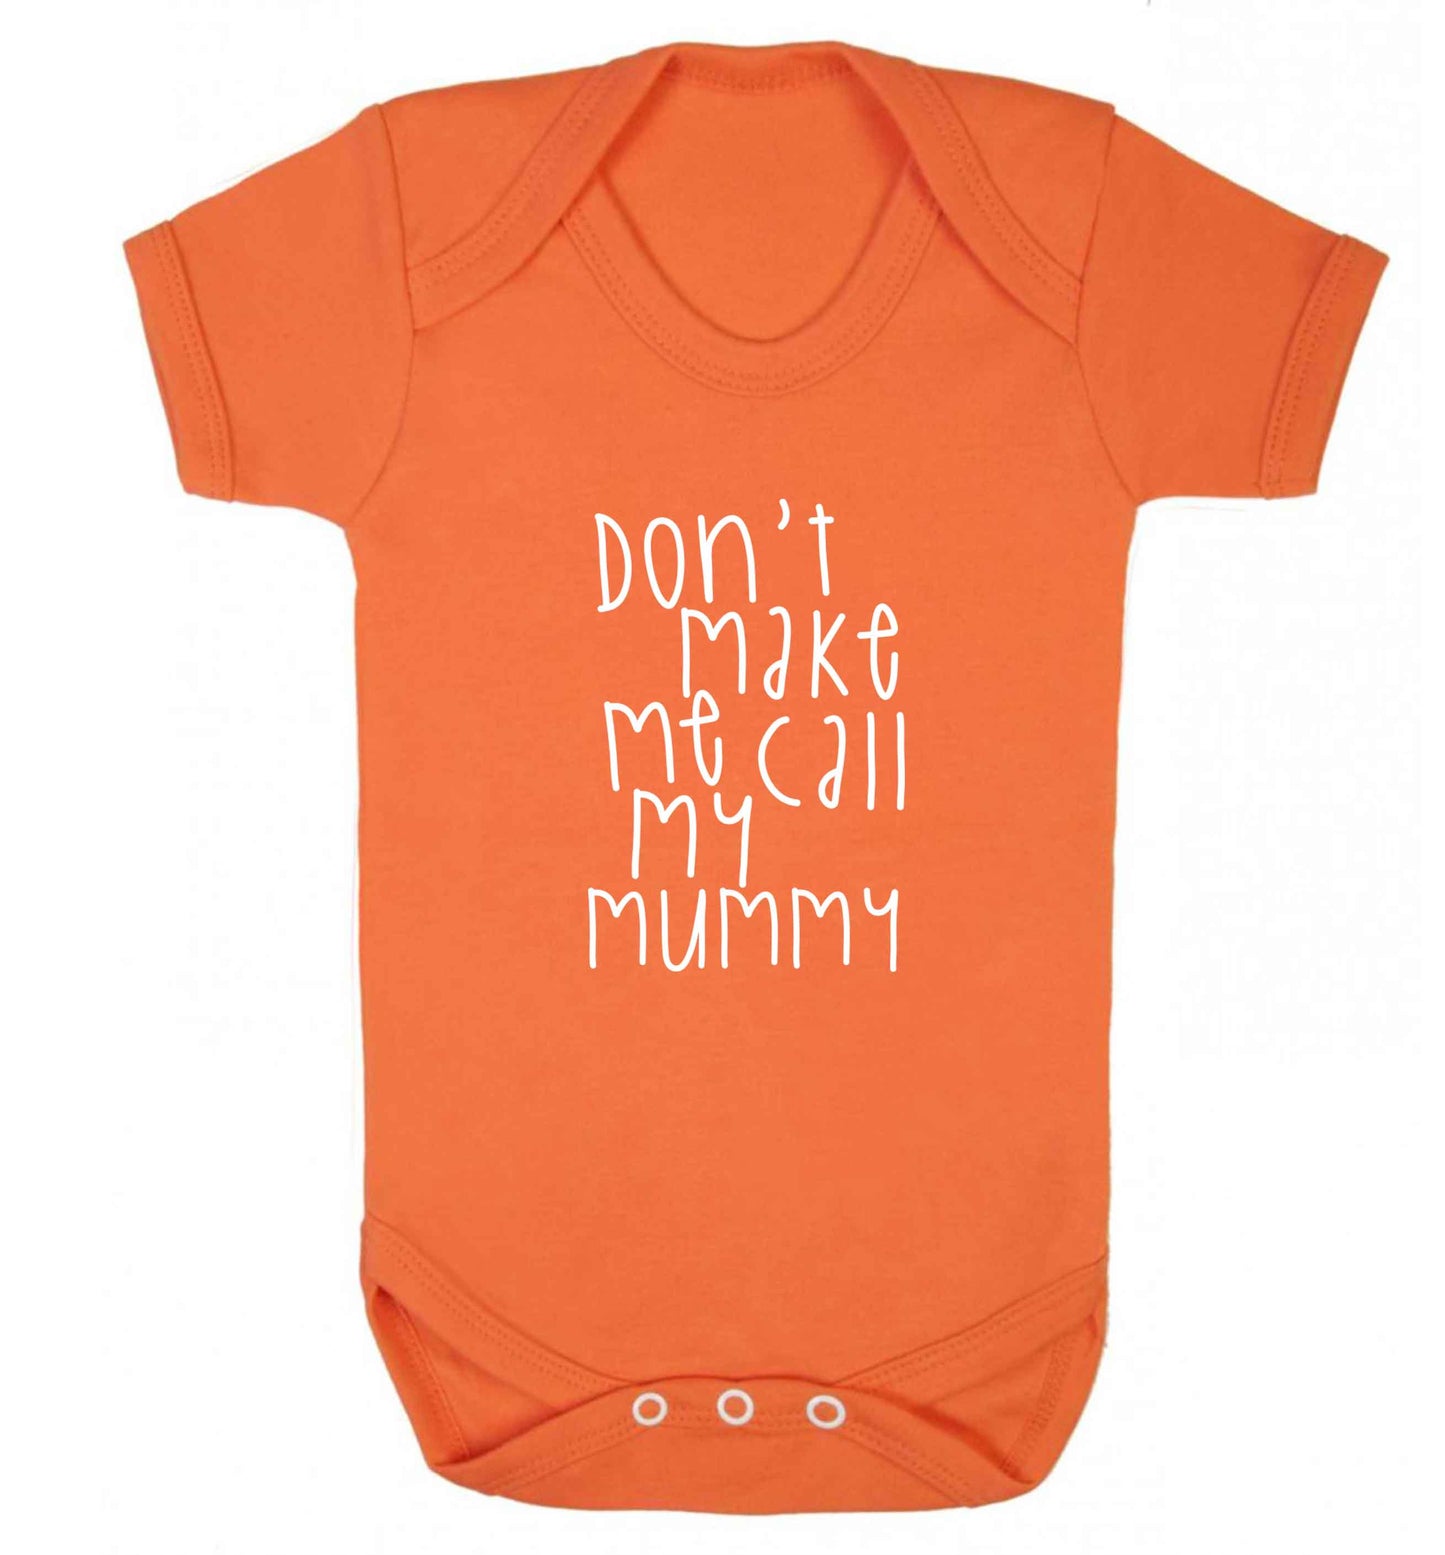 Don't make me call my mummy baby vest orange 18-24 months